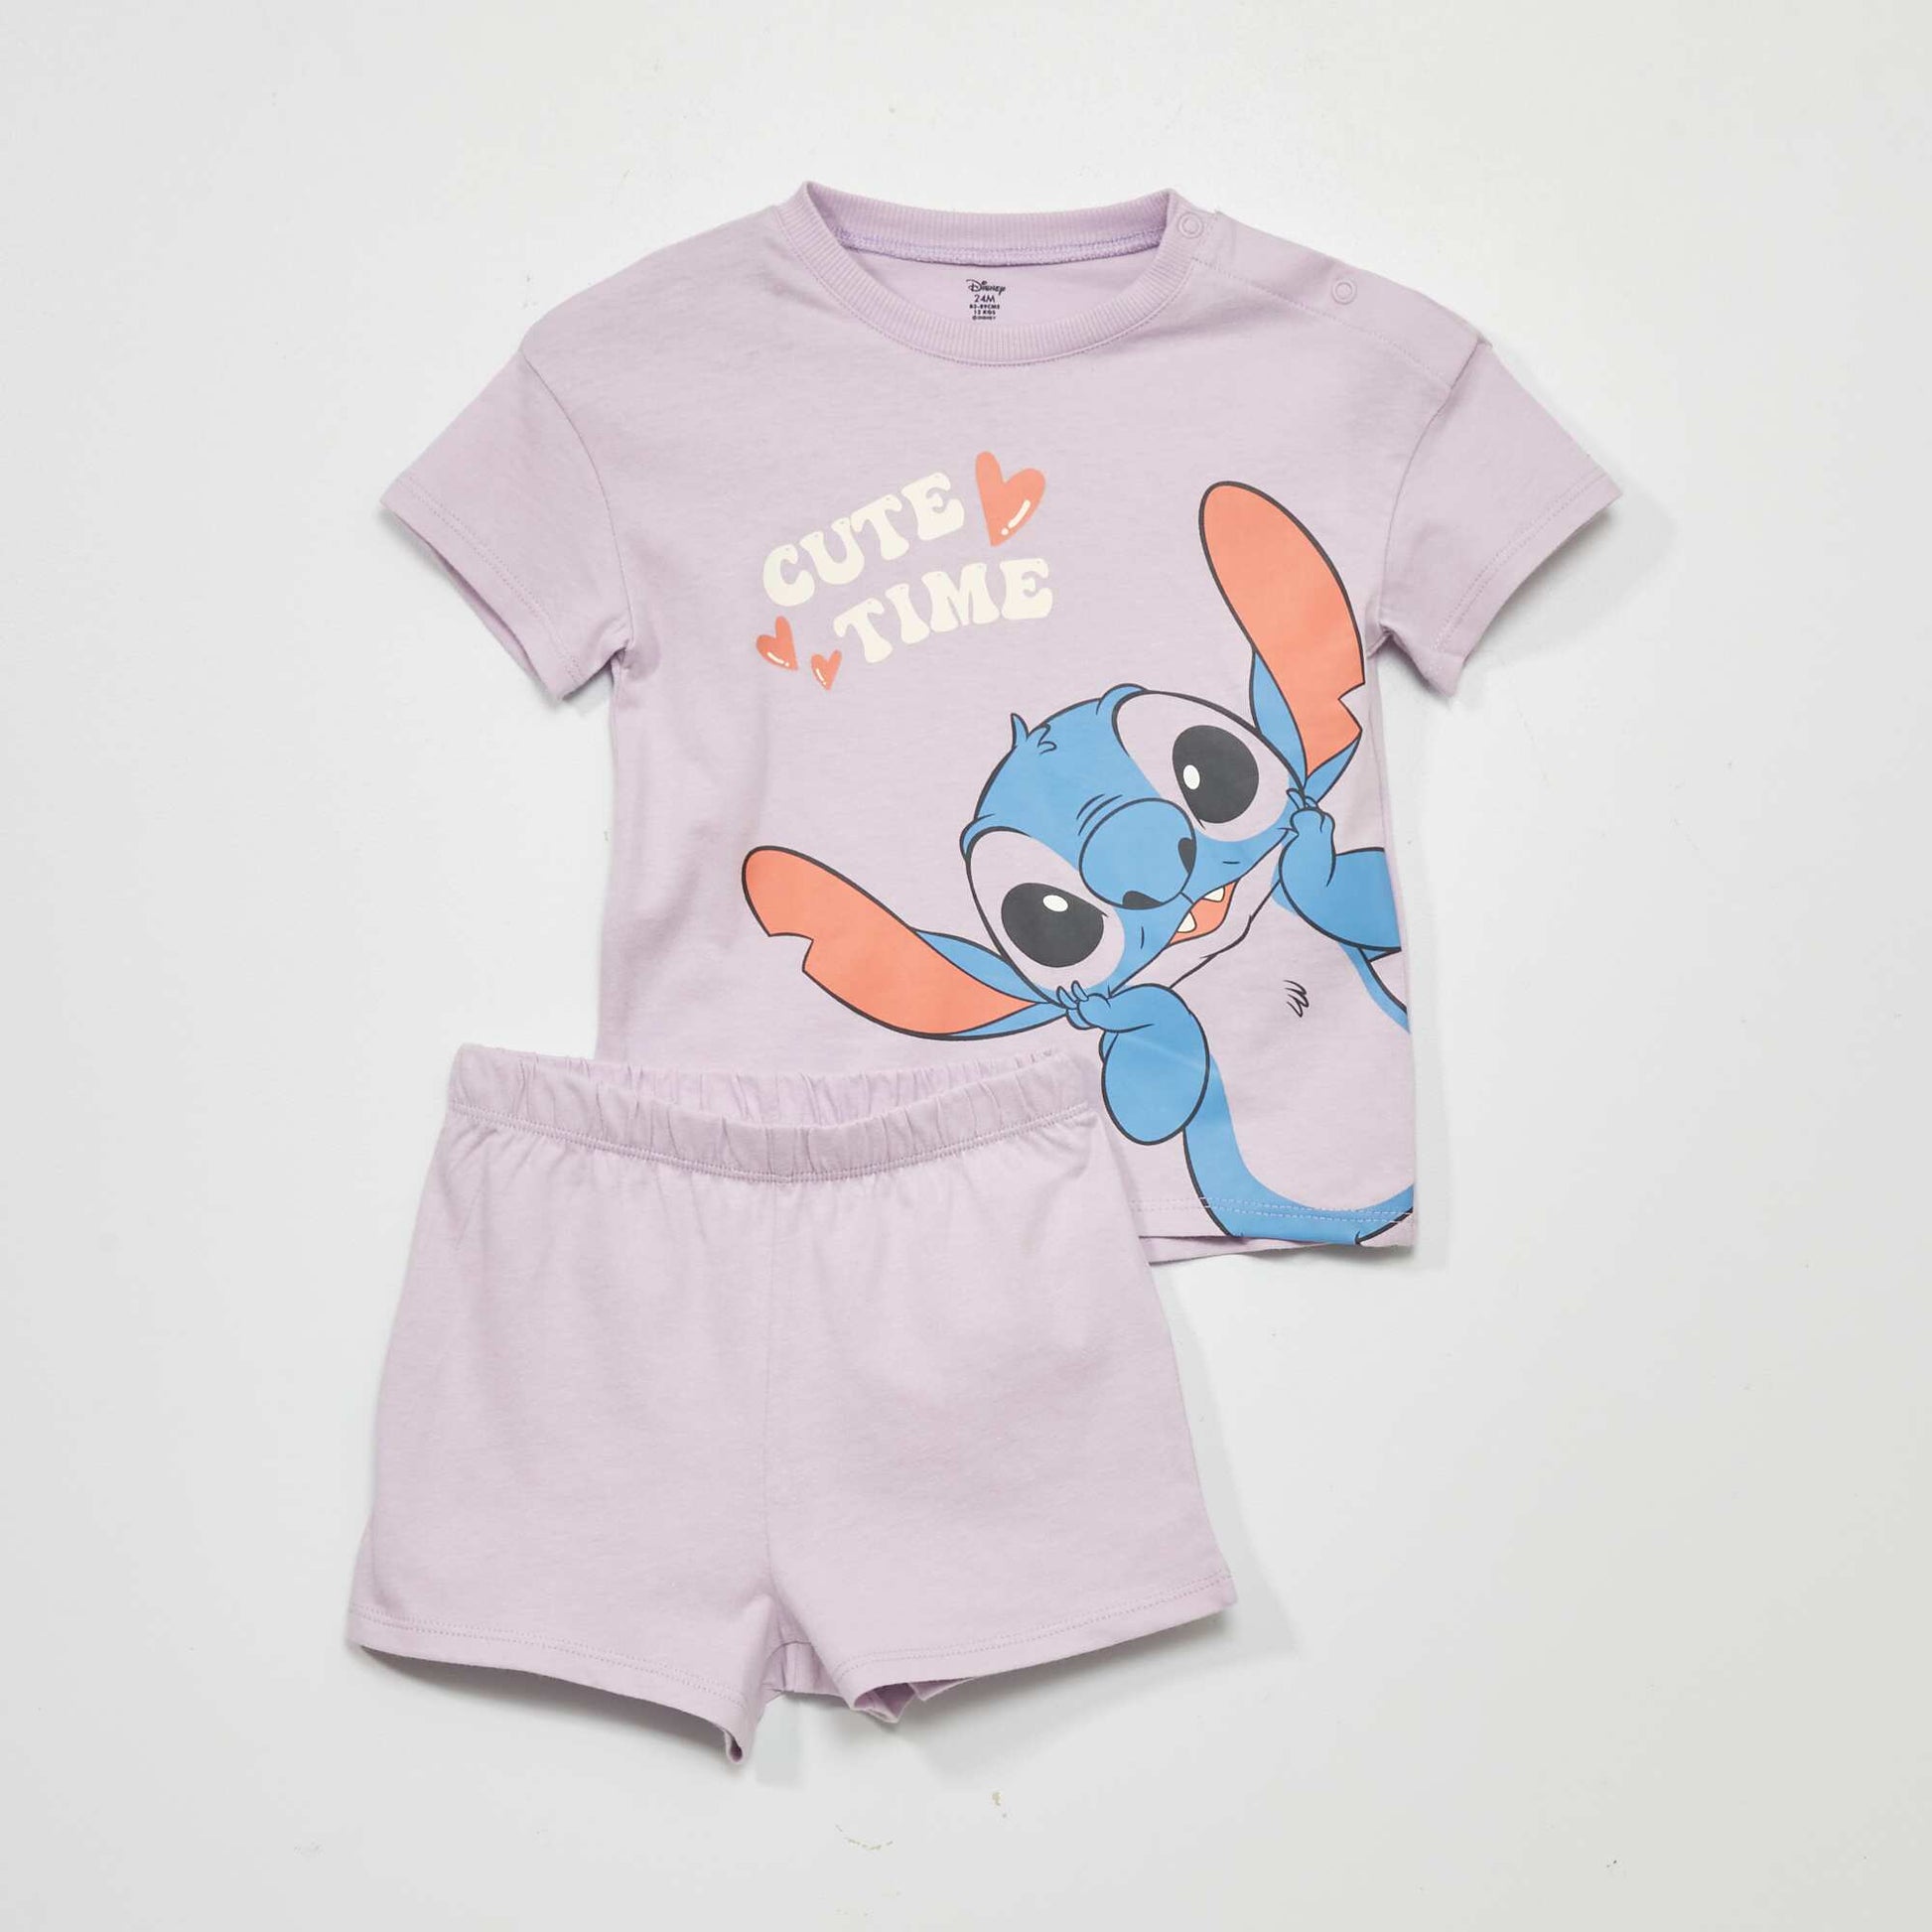 Stitch - Conjunto de pijama de 2 piezas para niñas